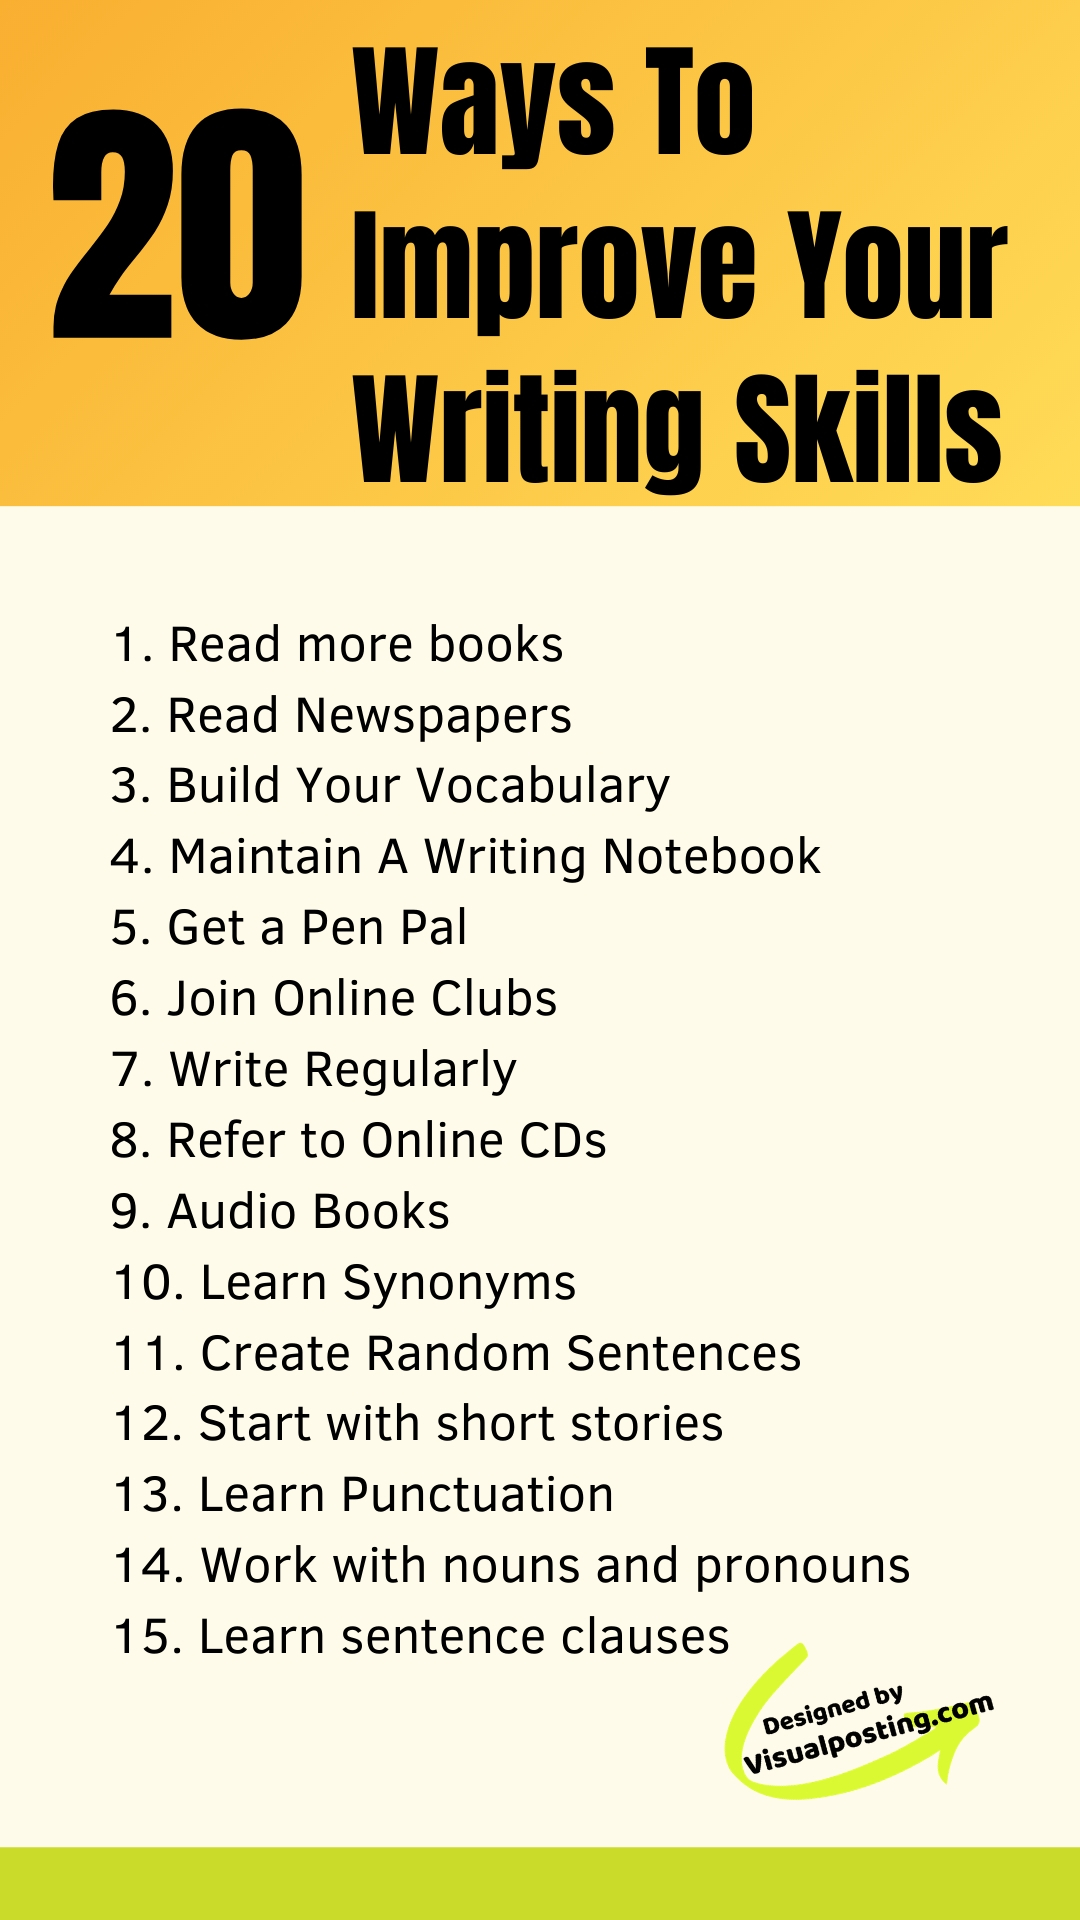 12 ways to improve your writing skills - Creativity